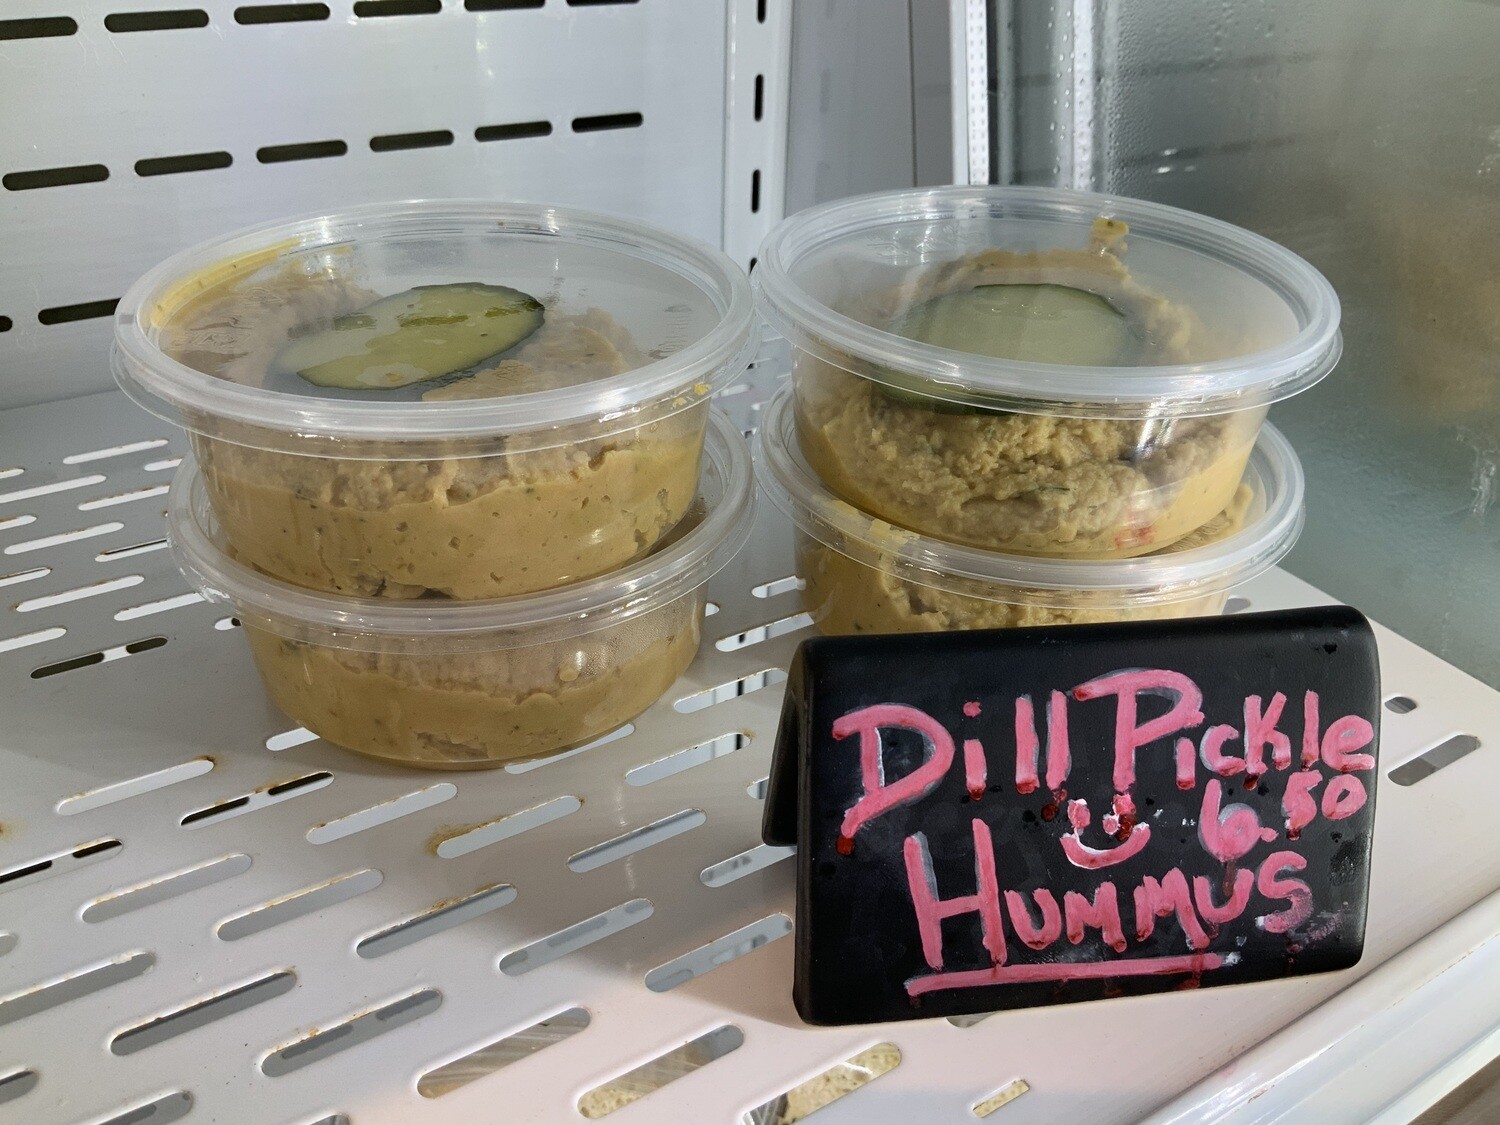 Dill pickle hummus